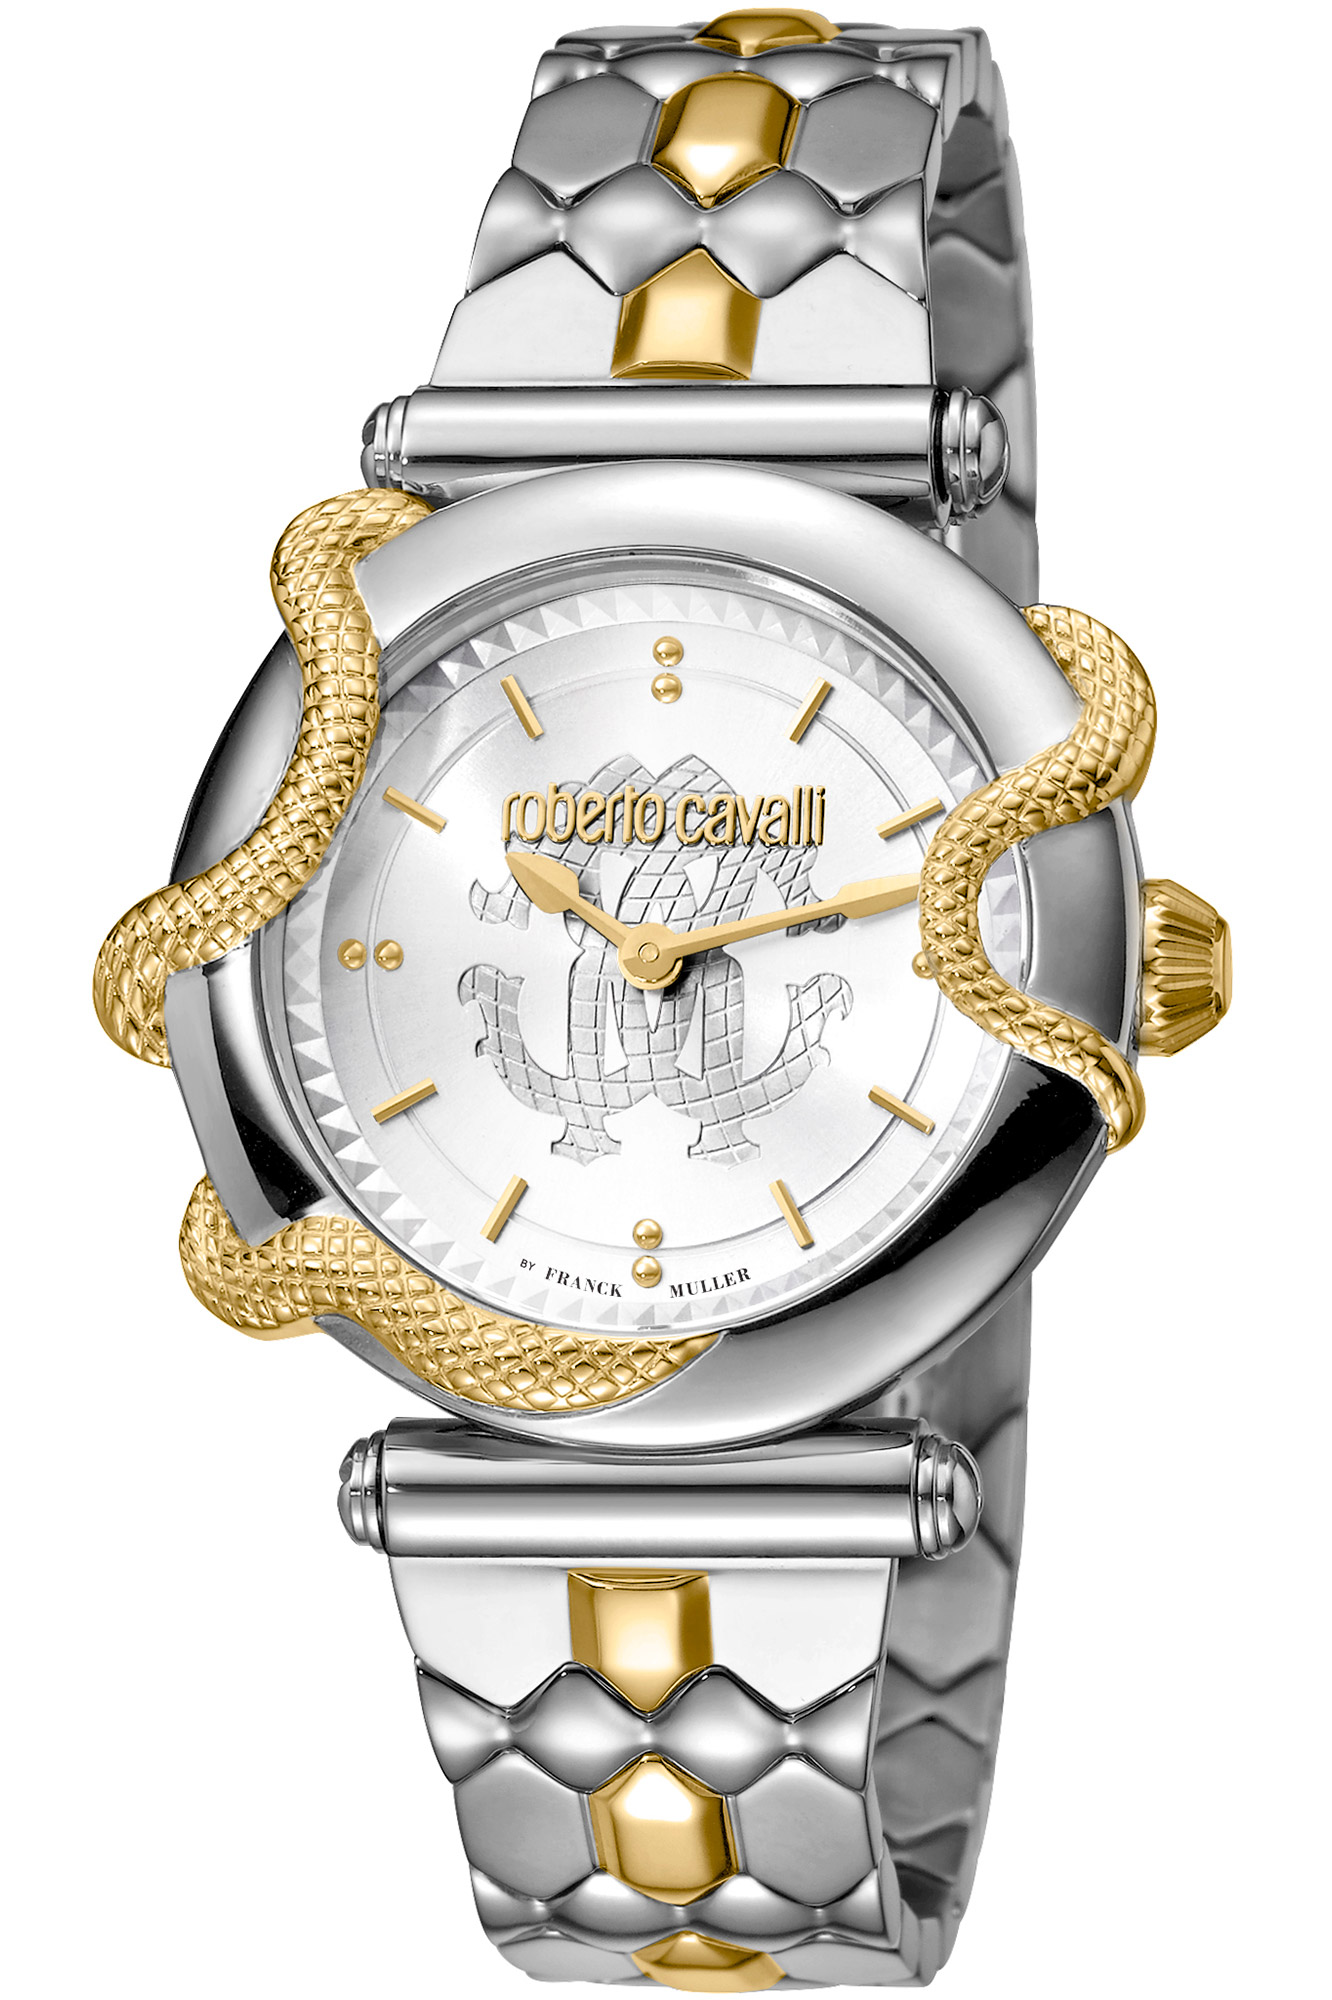 Watch Roberto Cavalli by Franck Muller rv1l058m0091